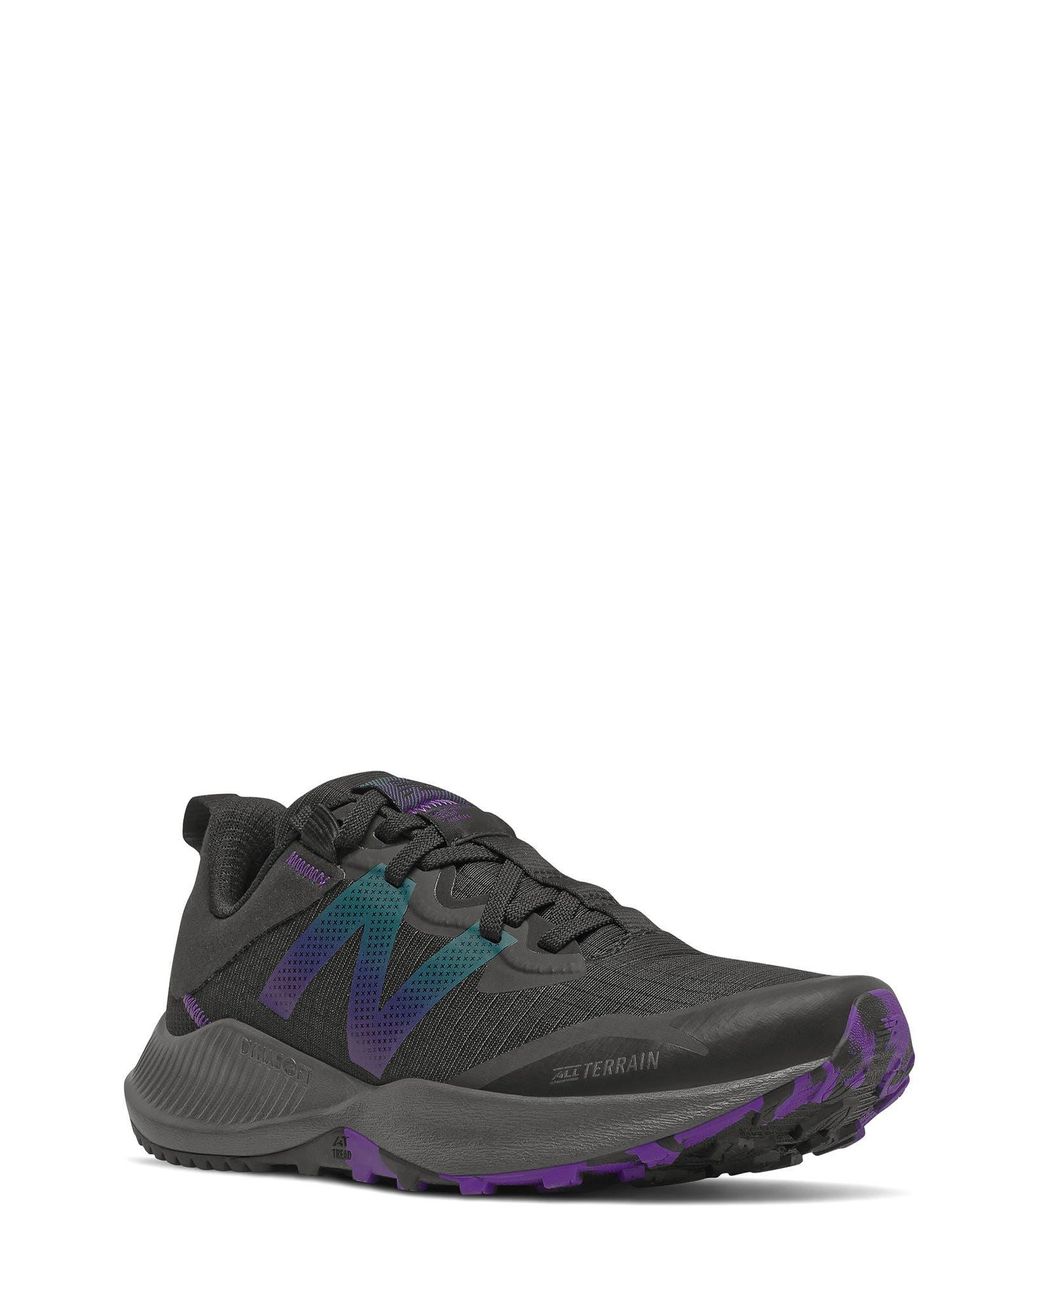 New Balance Wtntrv4 Trail Running Sneaker In Black At Nordstrom Rack | Lyst